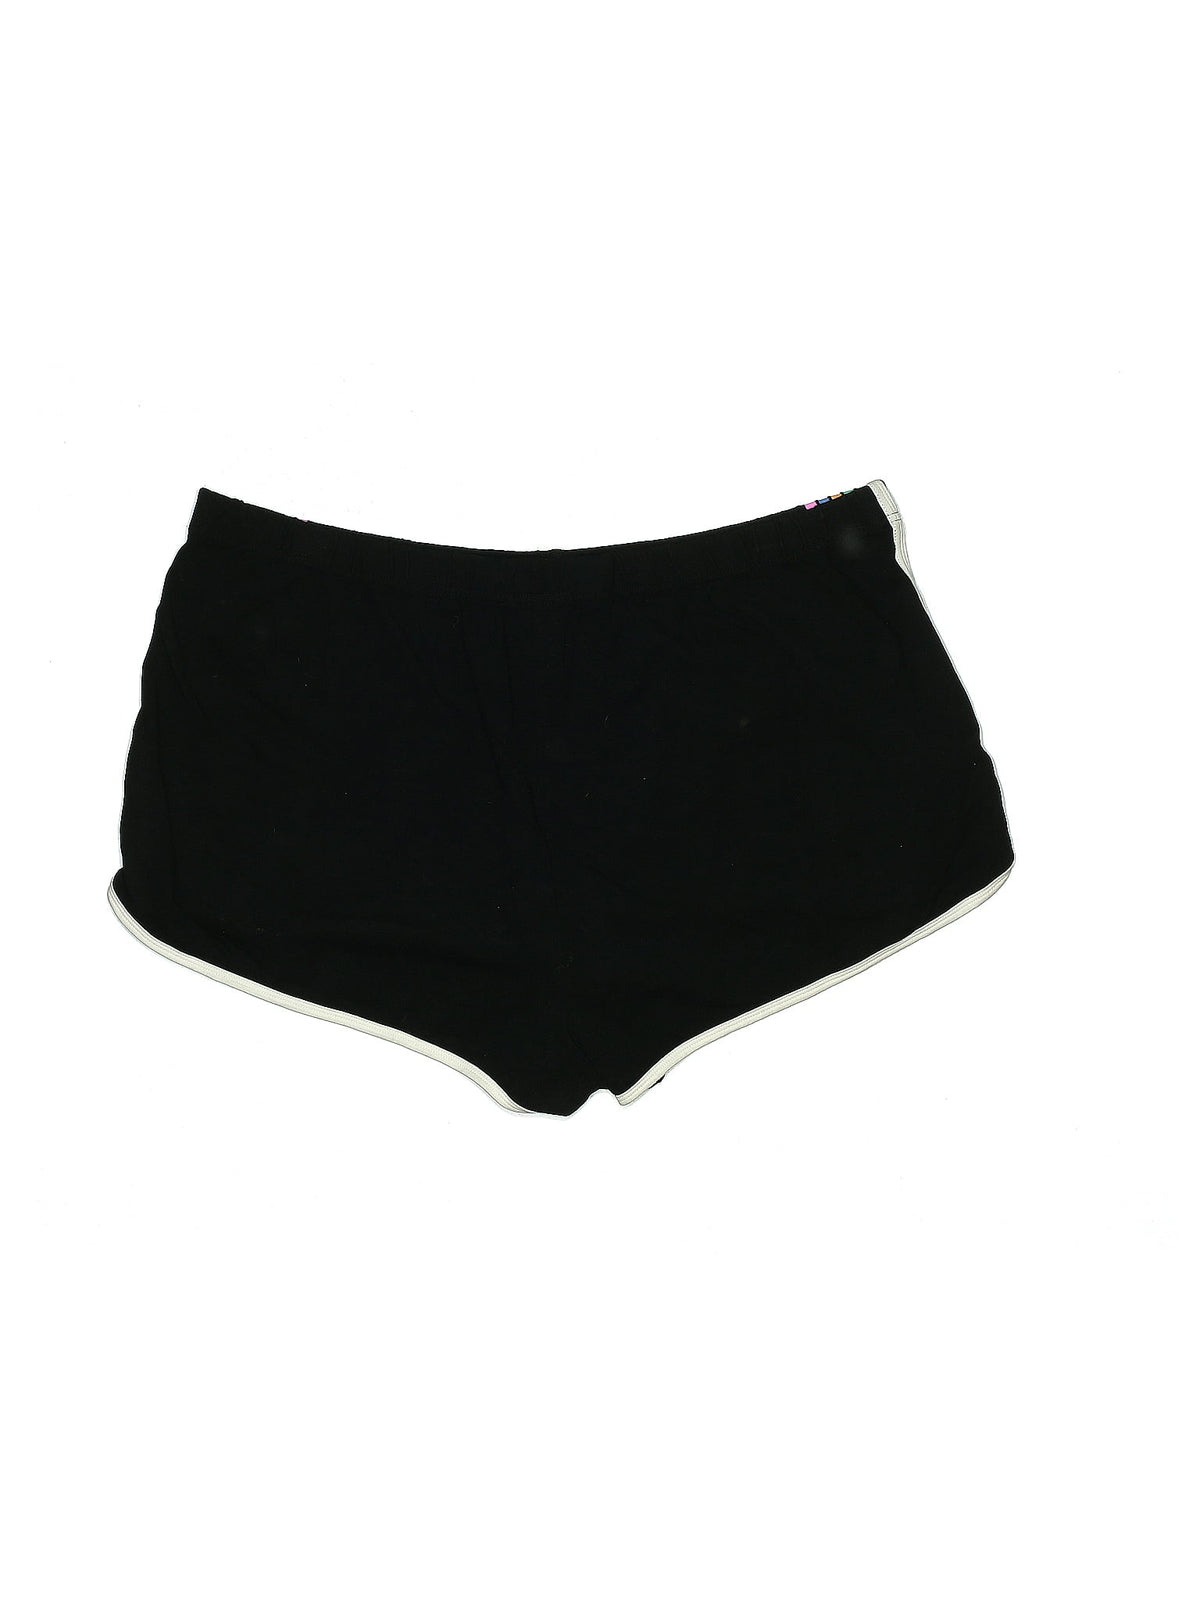 Athletic Shorts size - 3X (3) W